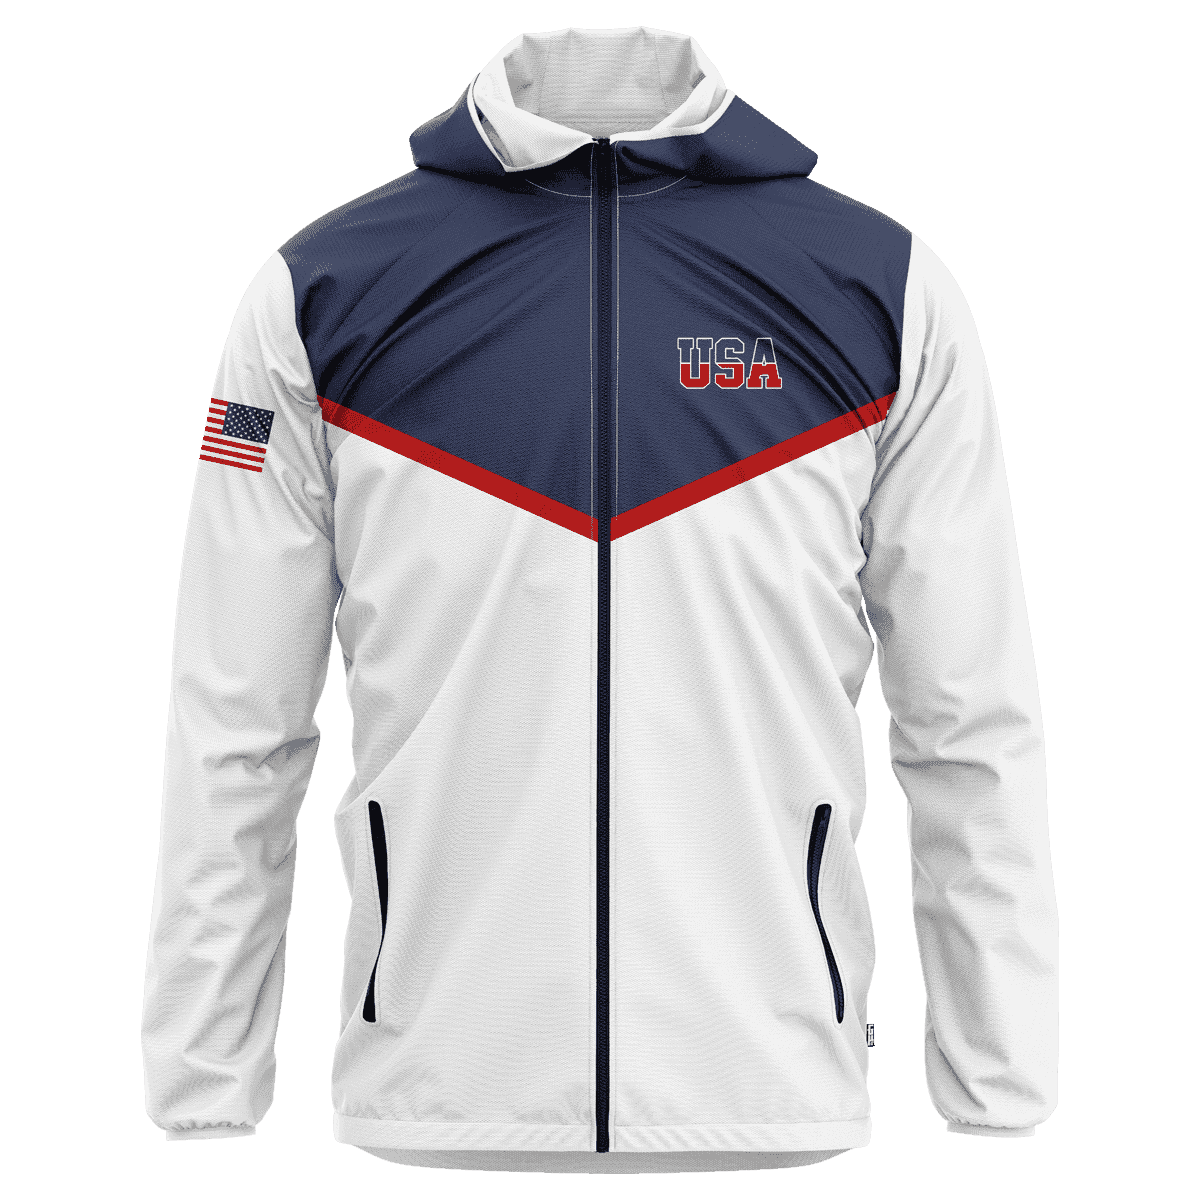 USA Jacket - Greater Half